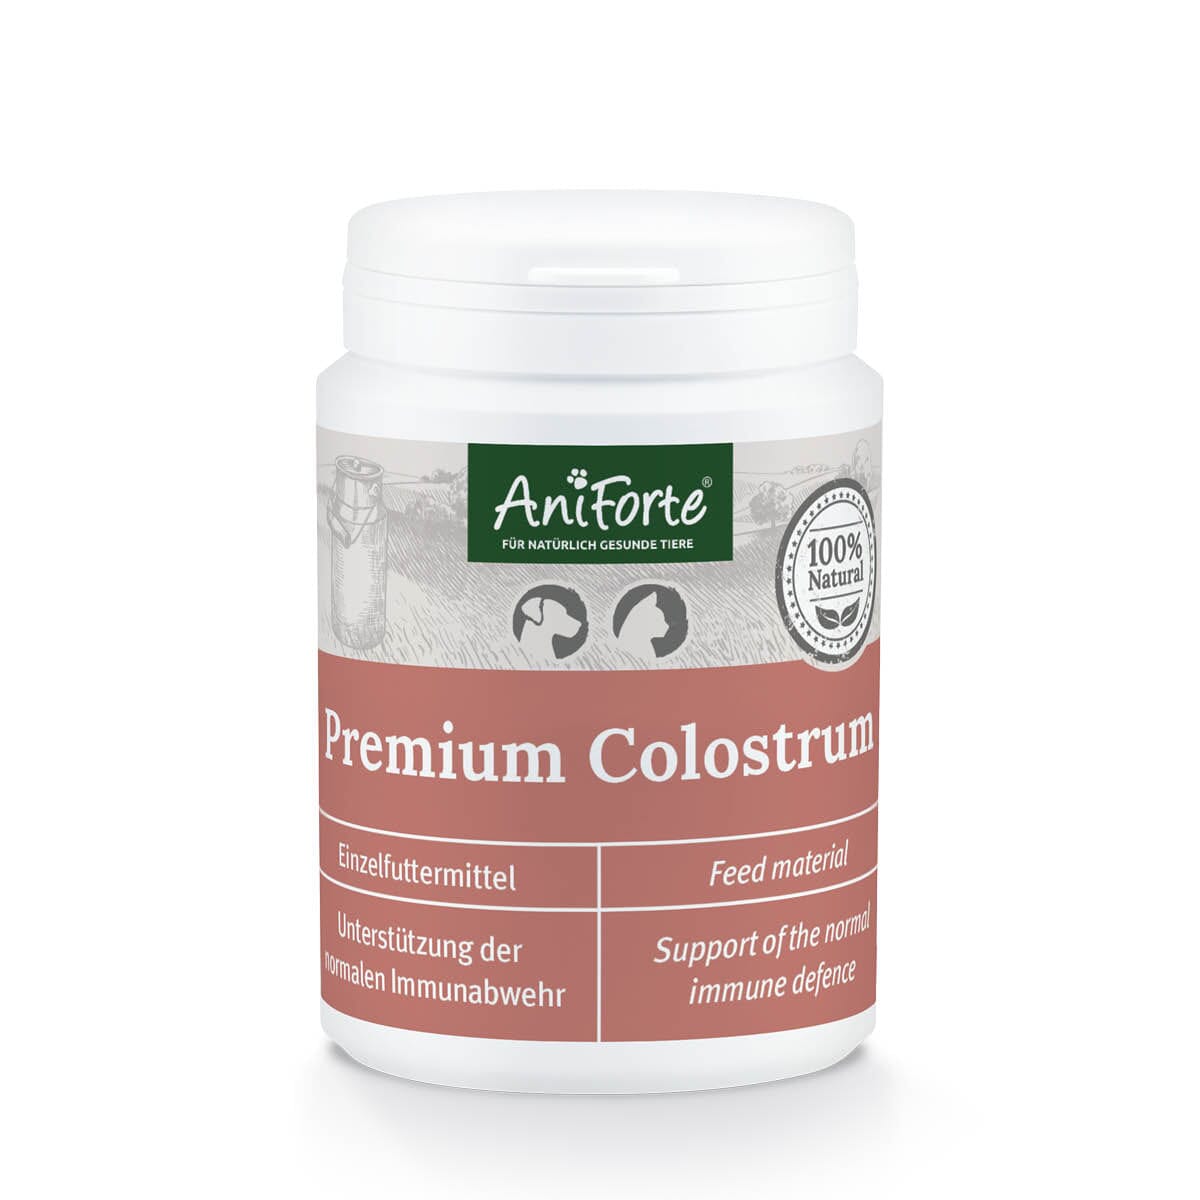 Premium Colostrum Powder for Dogs & Cats - 100g - AniForte UK